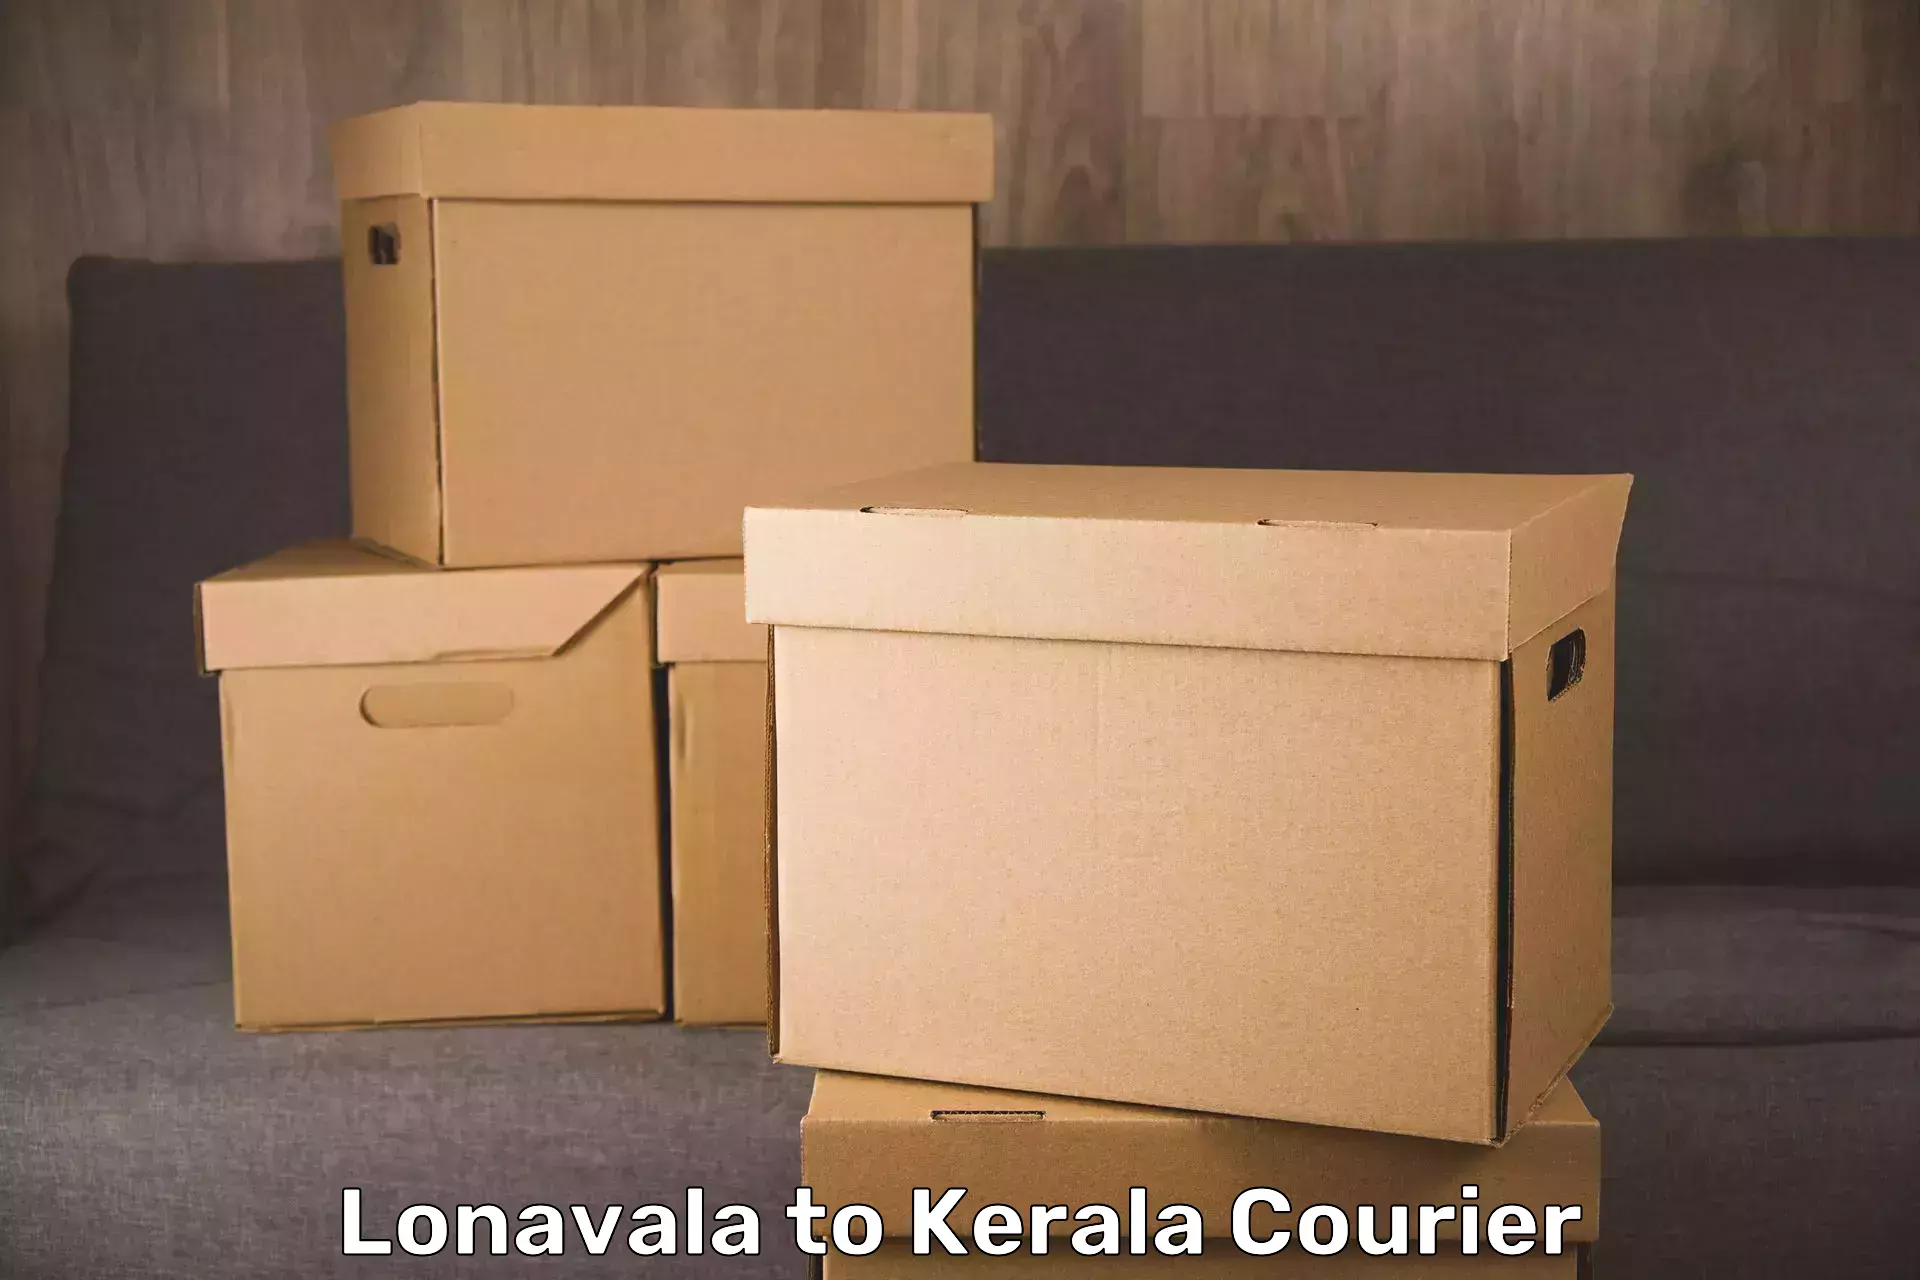 Luggage shipment specialists Lonavala to Kerala